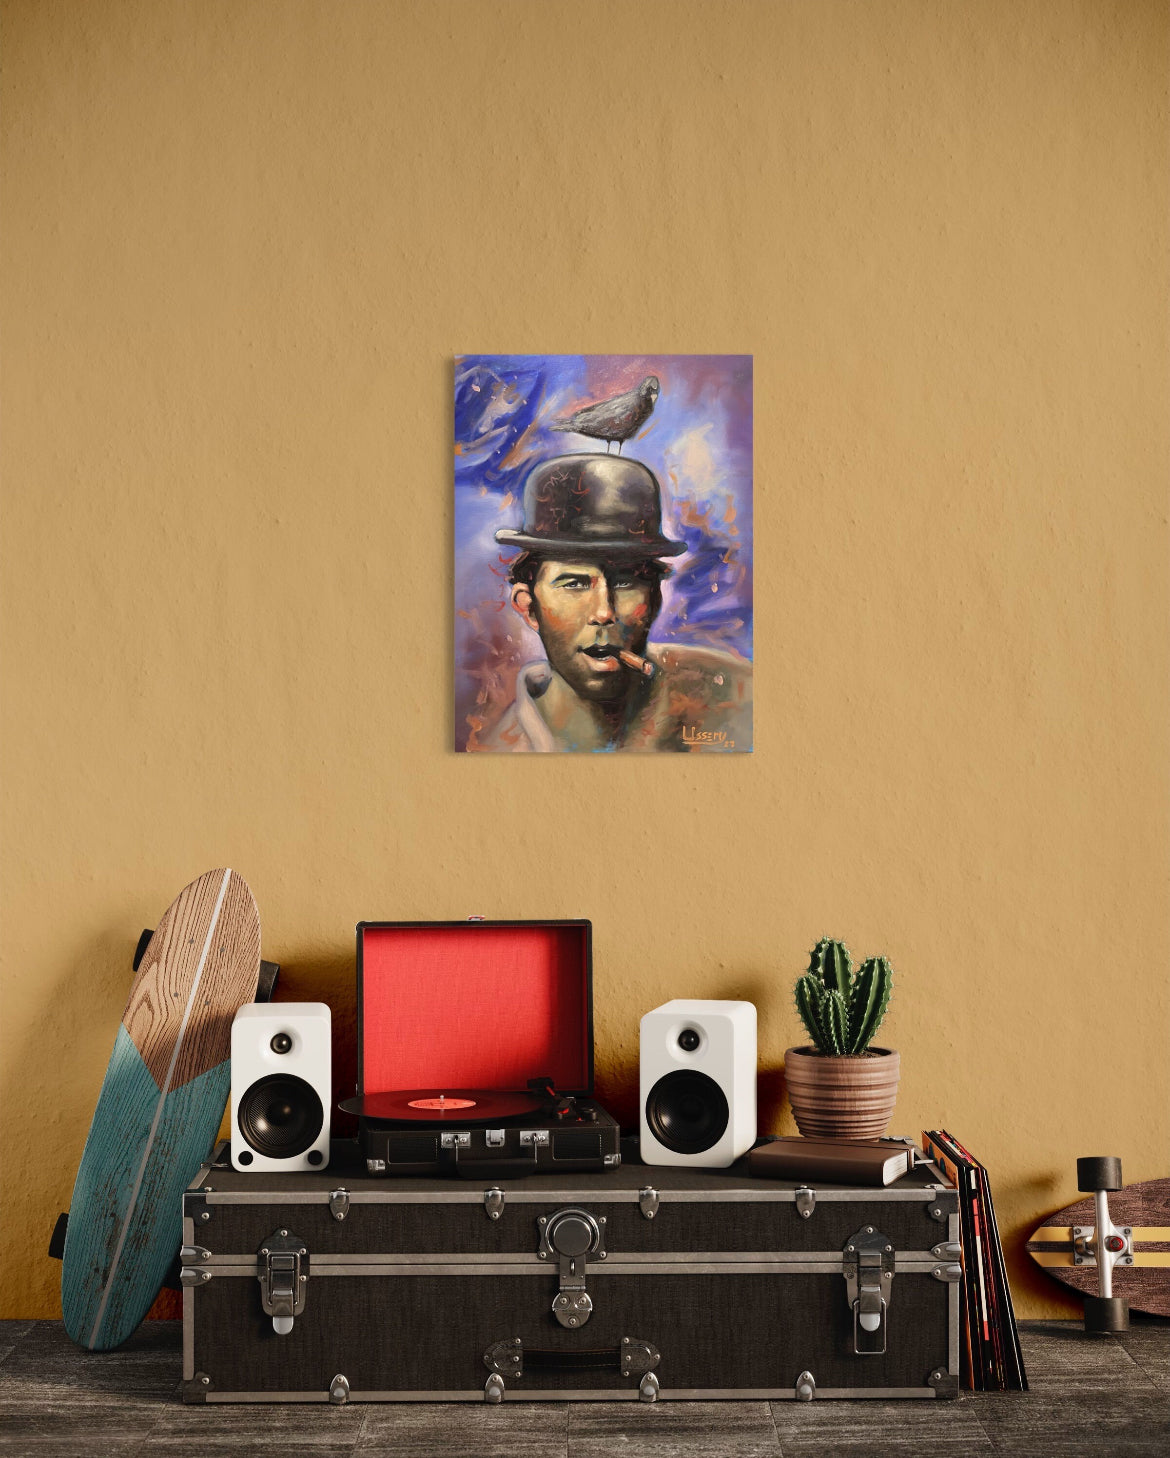 “Waits for it” A portrait of Tom Waits